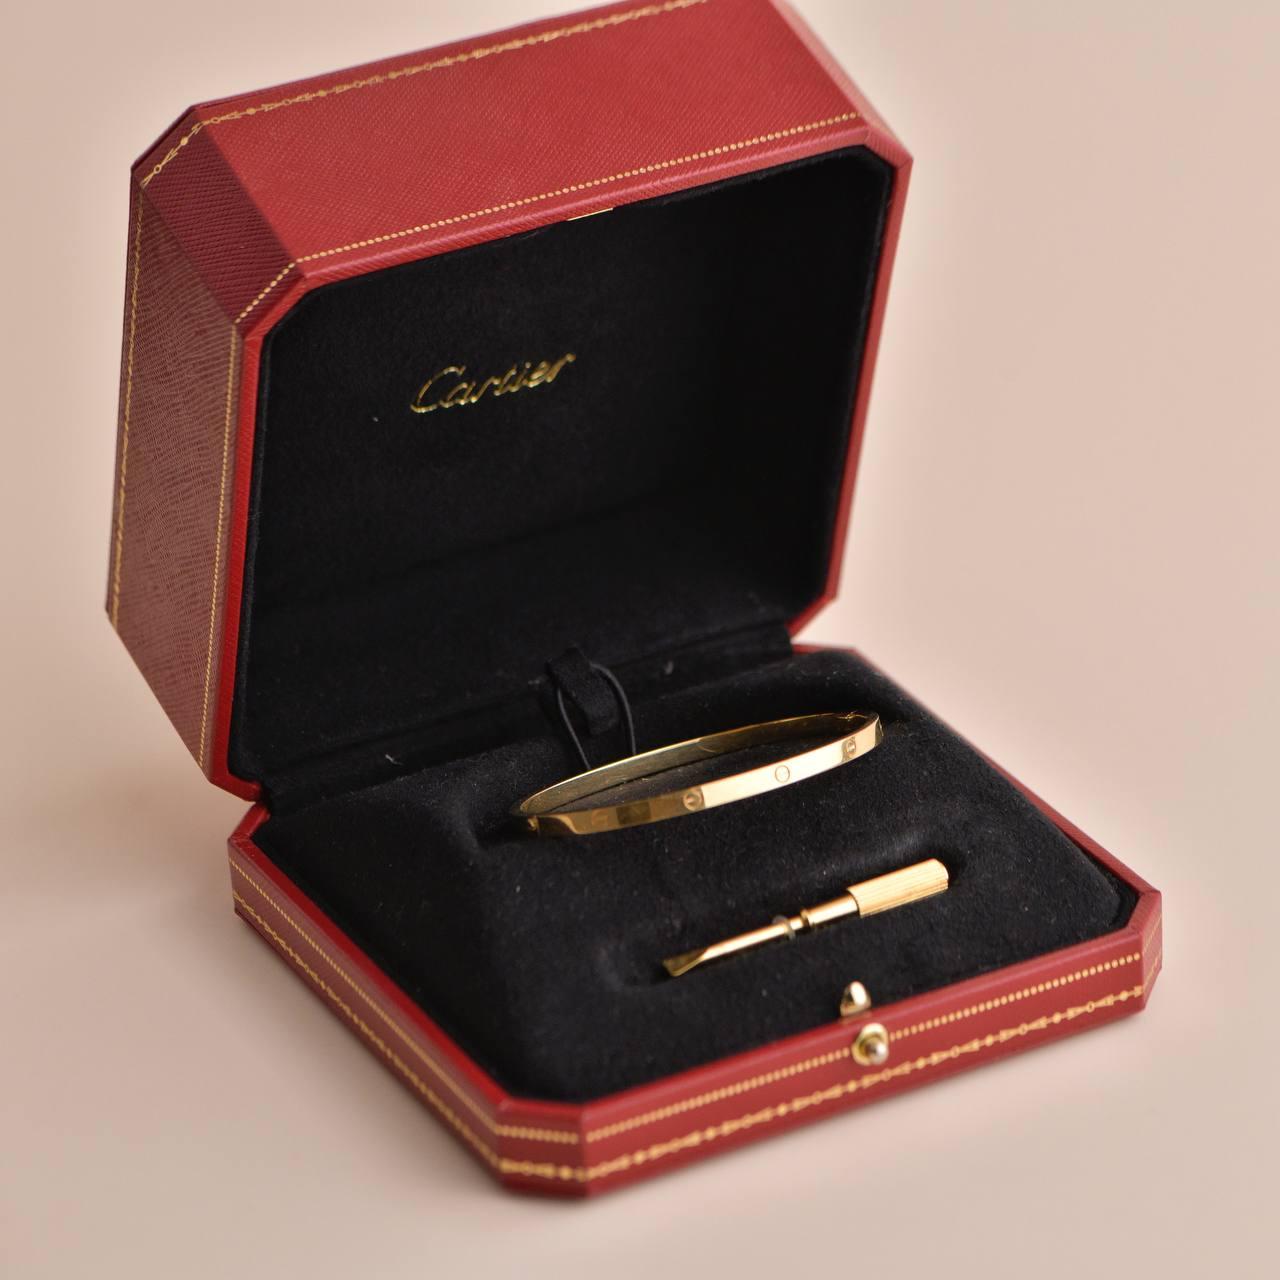 SKU         AT-1789
Brand	Cartier
Model	B6047518
Serial No	HK****
Date	Circa 2018
______________________________________________________________
Metal	18K Yellow Gold
Width	Approx. 3.65 mm
Bracelet Size	18
Retail Price 	4,550 incl. VAT / $4,750.00 /